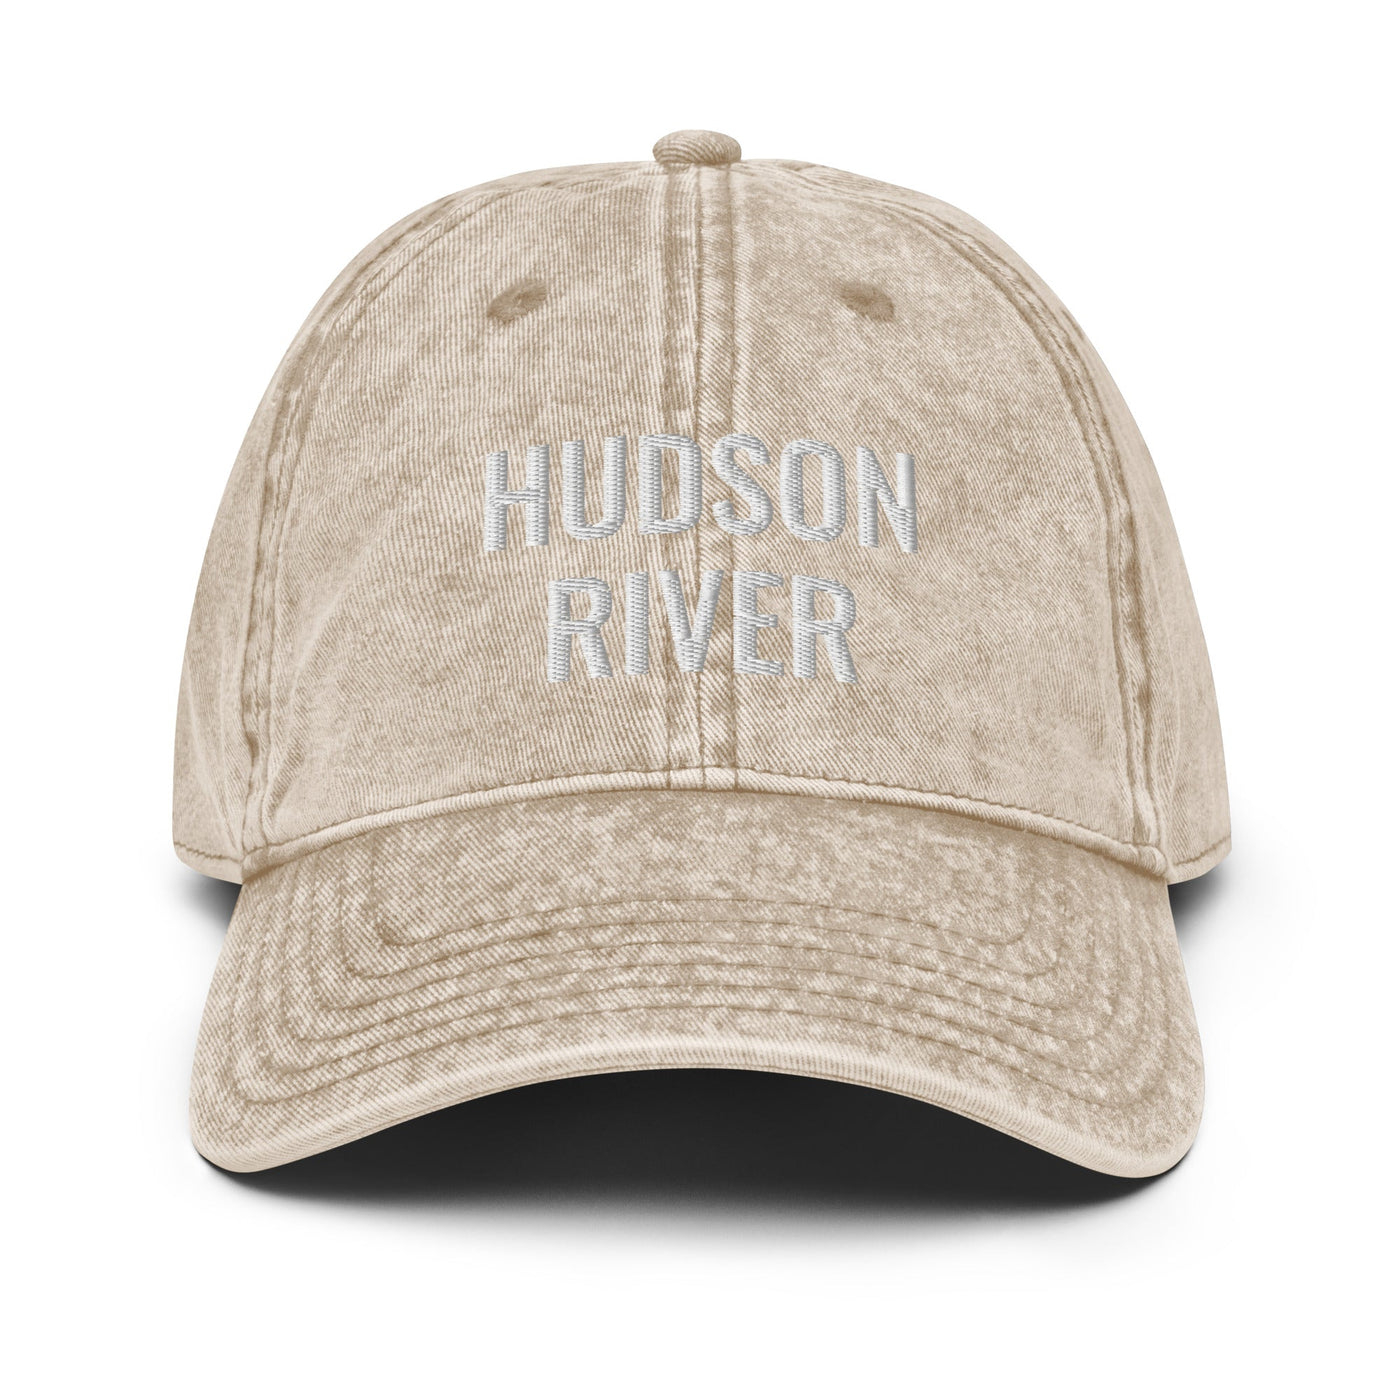 Hudson River Hat - Ezra's Clothing